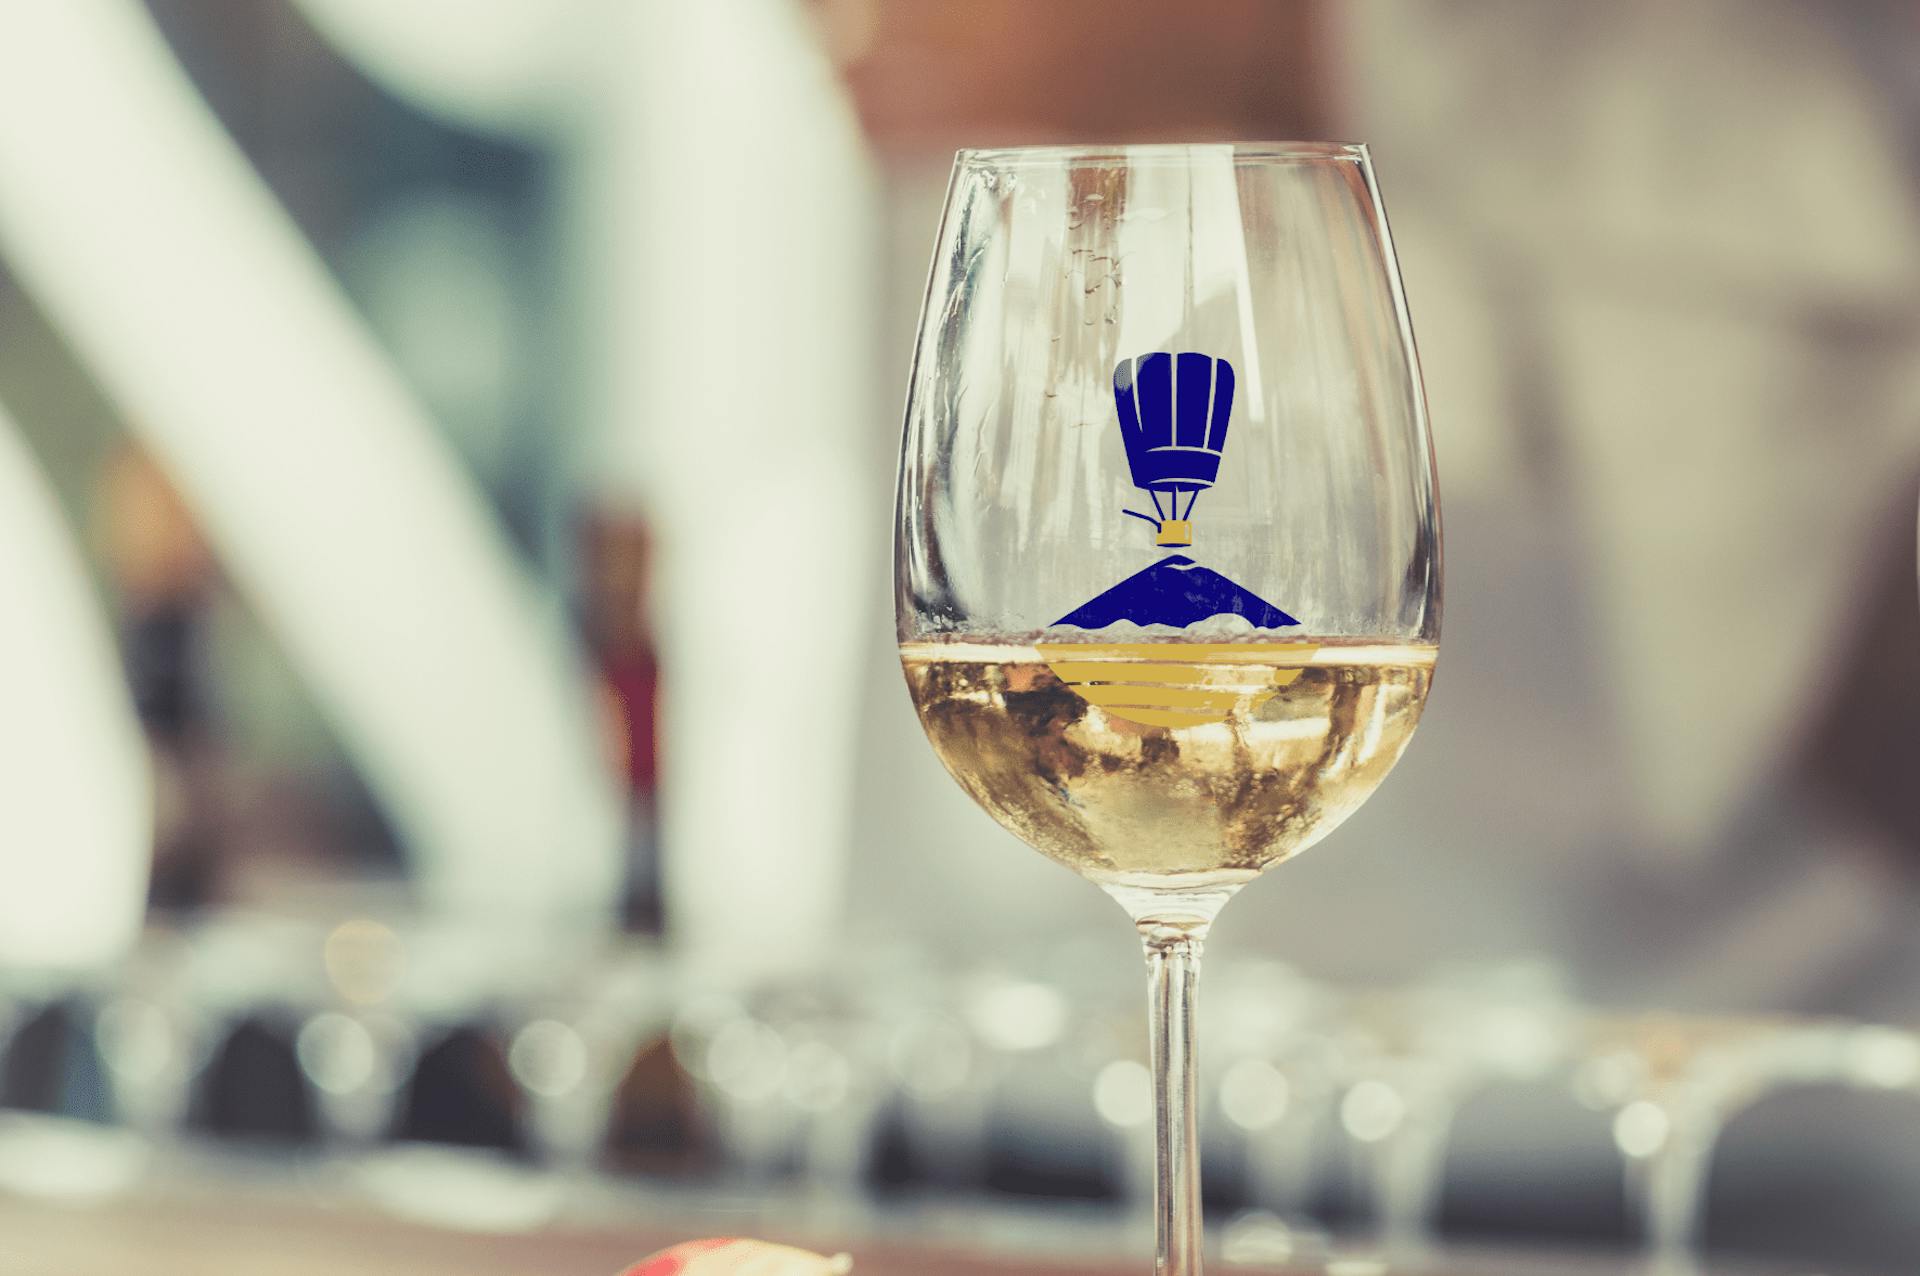 Mockup d'un verre de vin arborant le nouveau logo de "Les Petits Prés", restaurant de Samuel Albert.